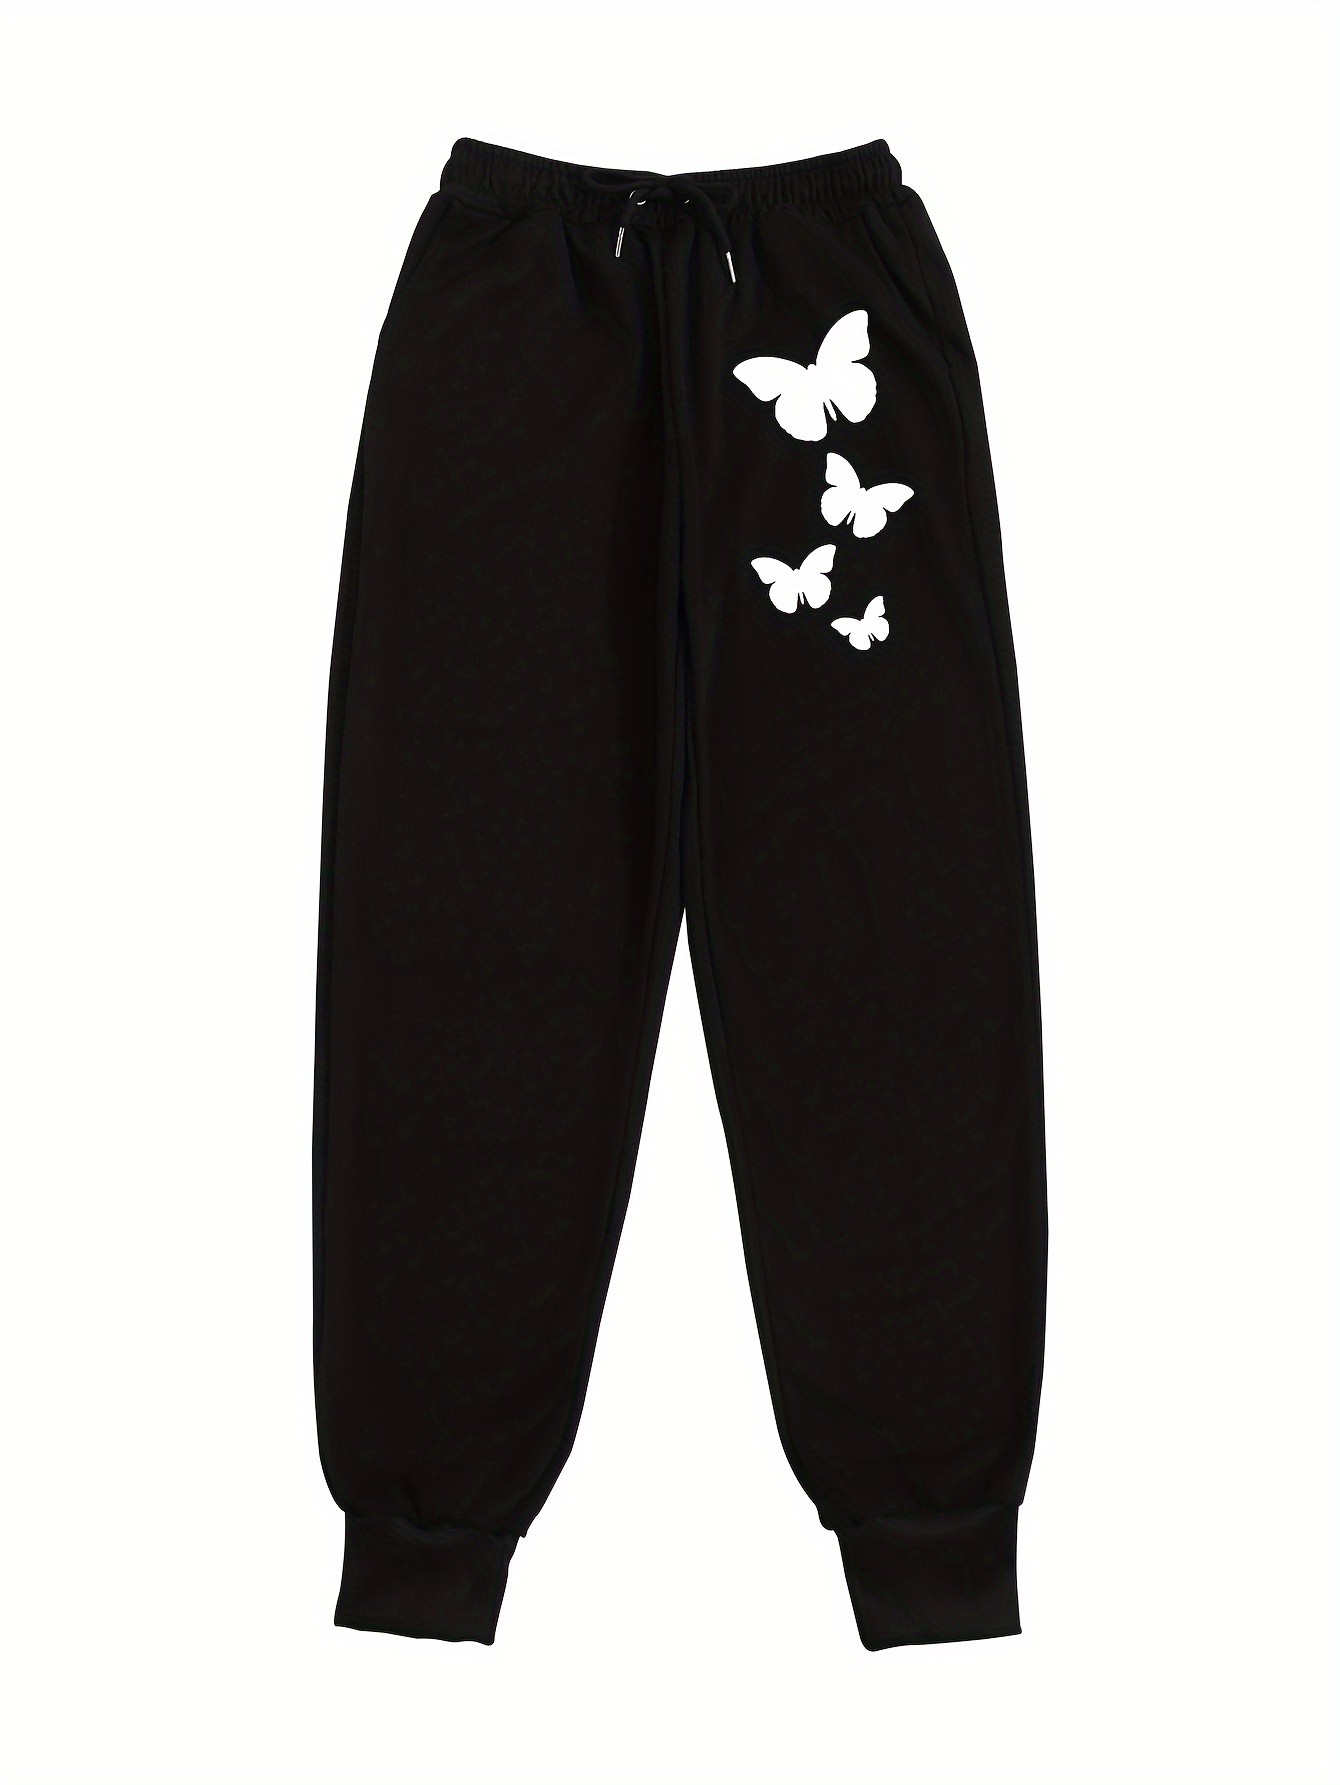 Black Cotton Stretchable Pants, Candy-6231-Black